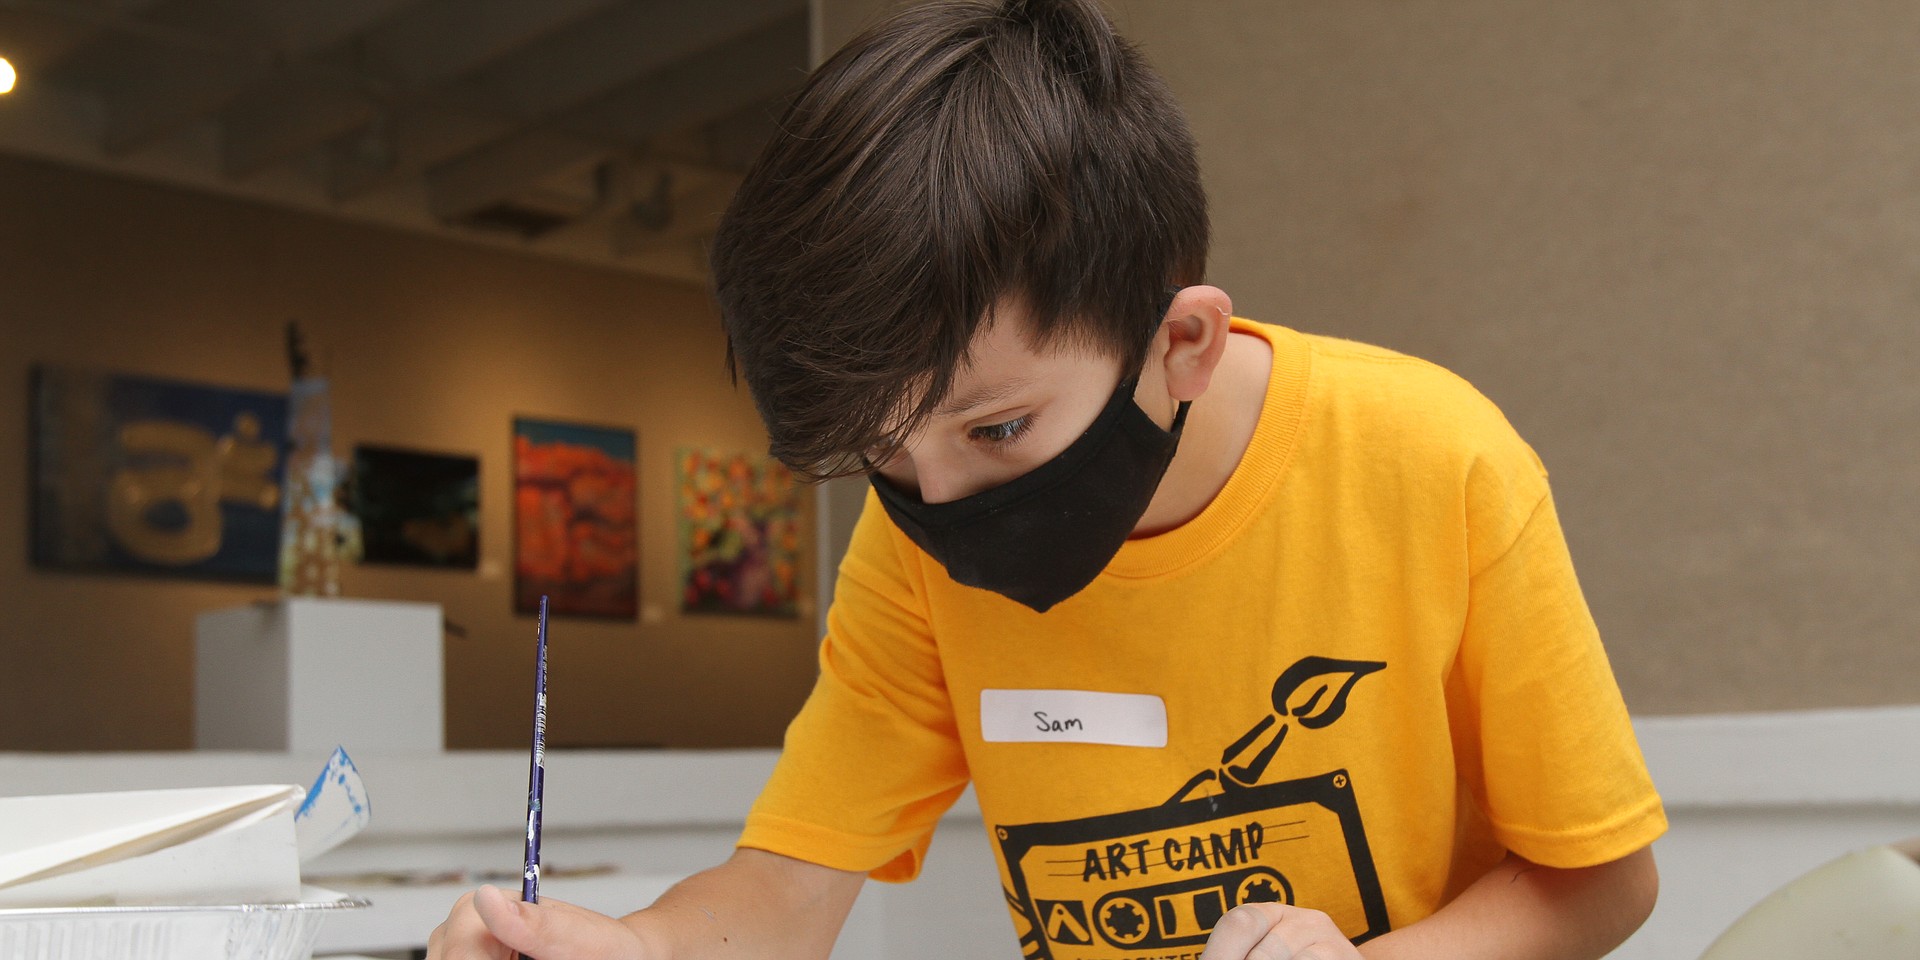 Art Center Sarasota holds its Creative Kids/Emerging Artists camp each week throughout the summer.